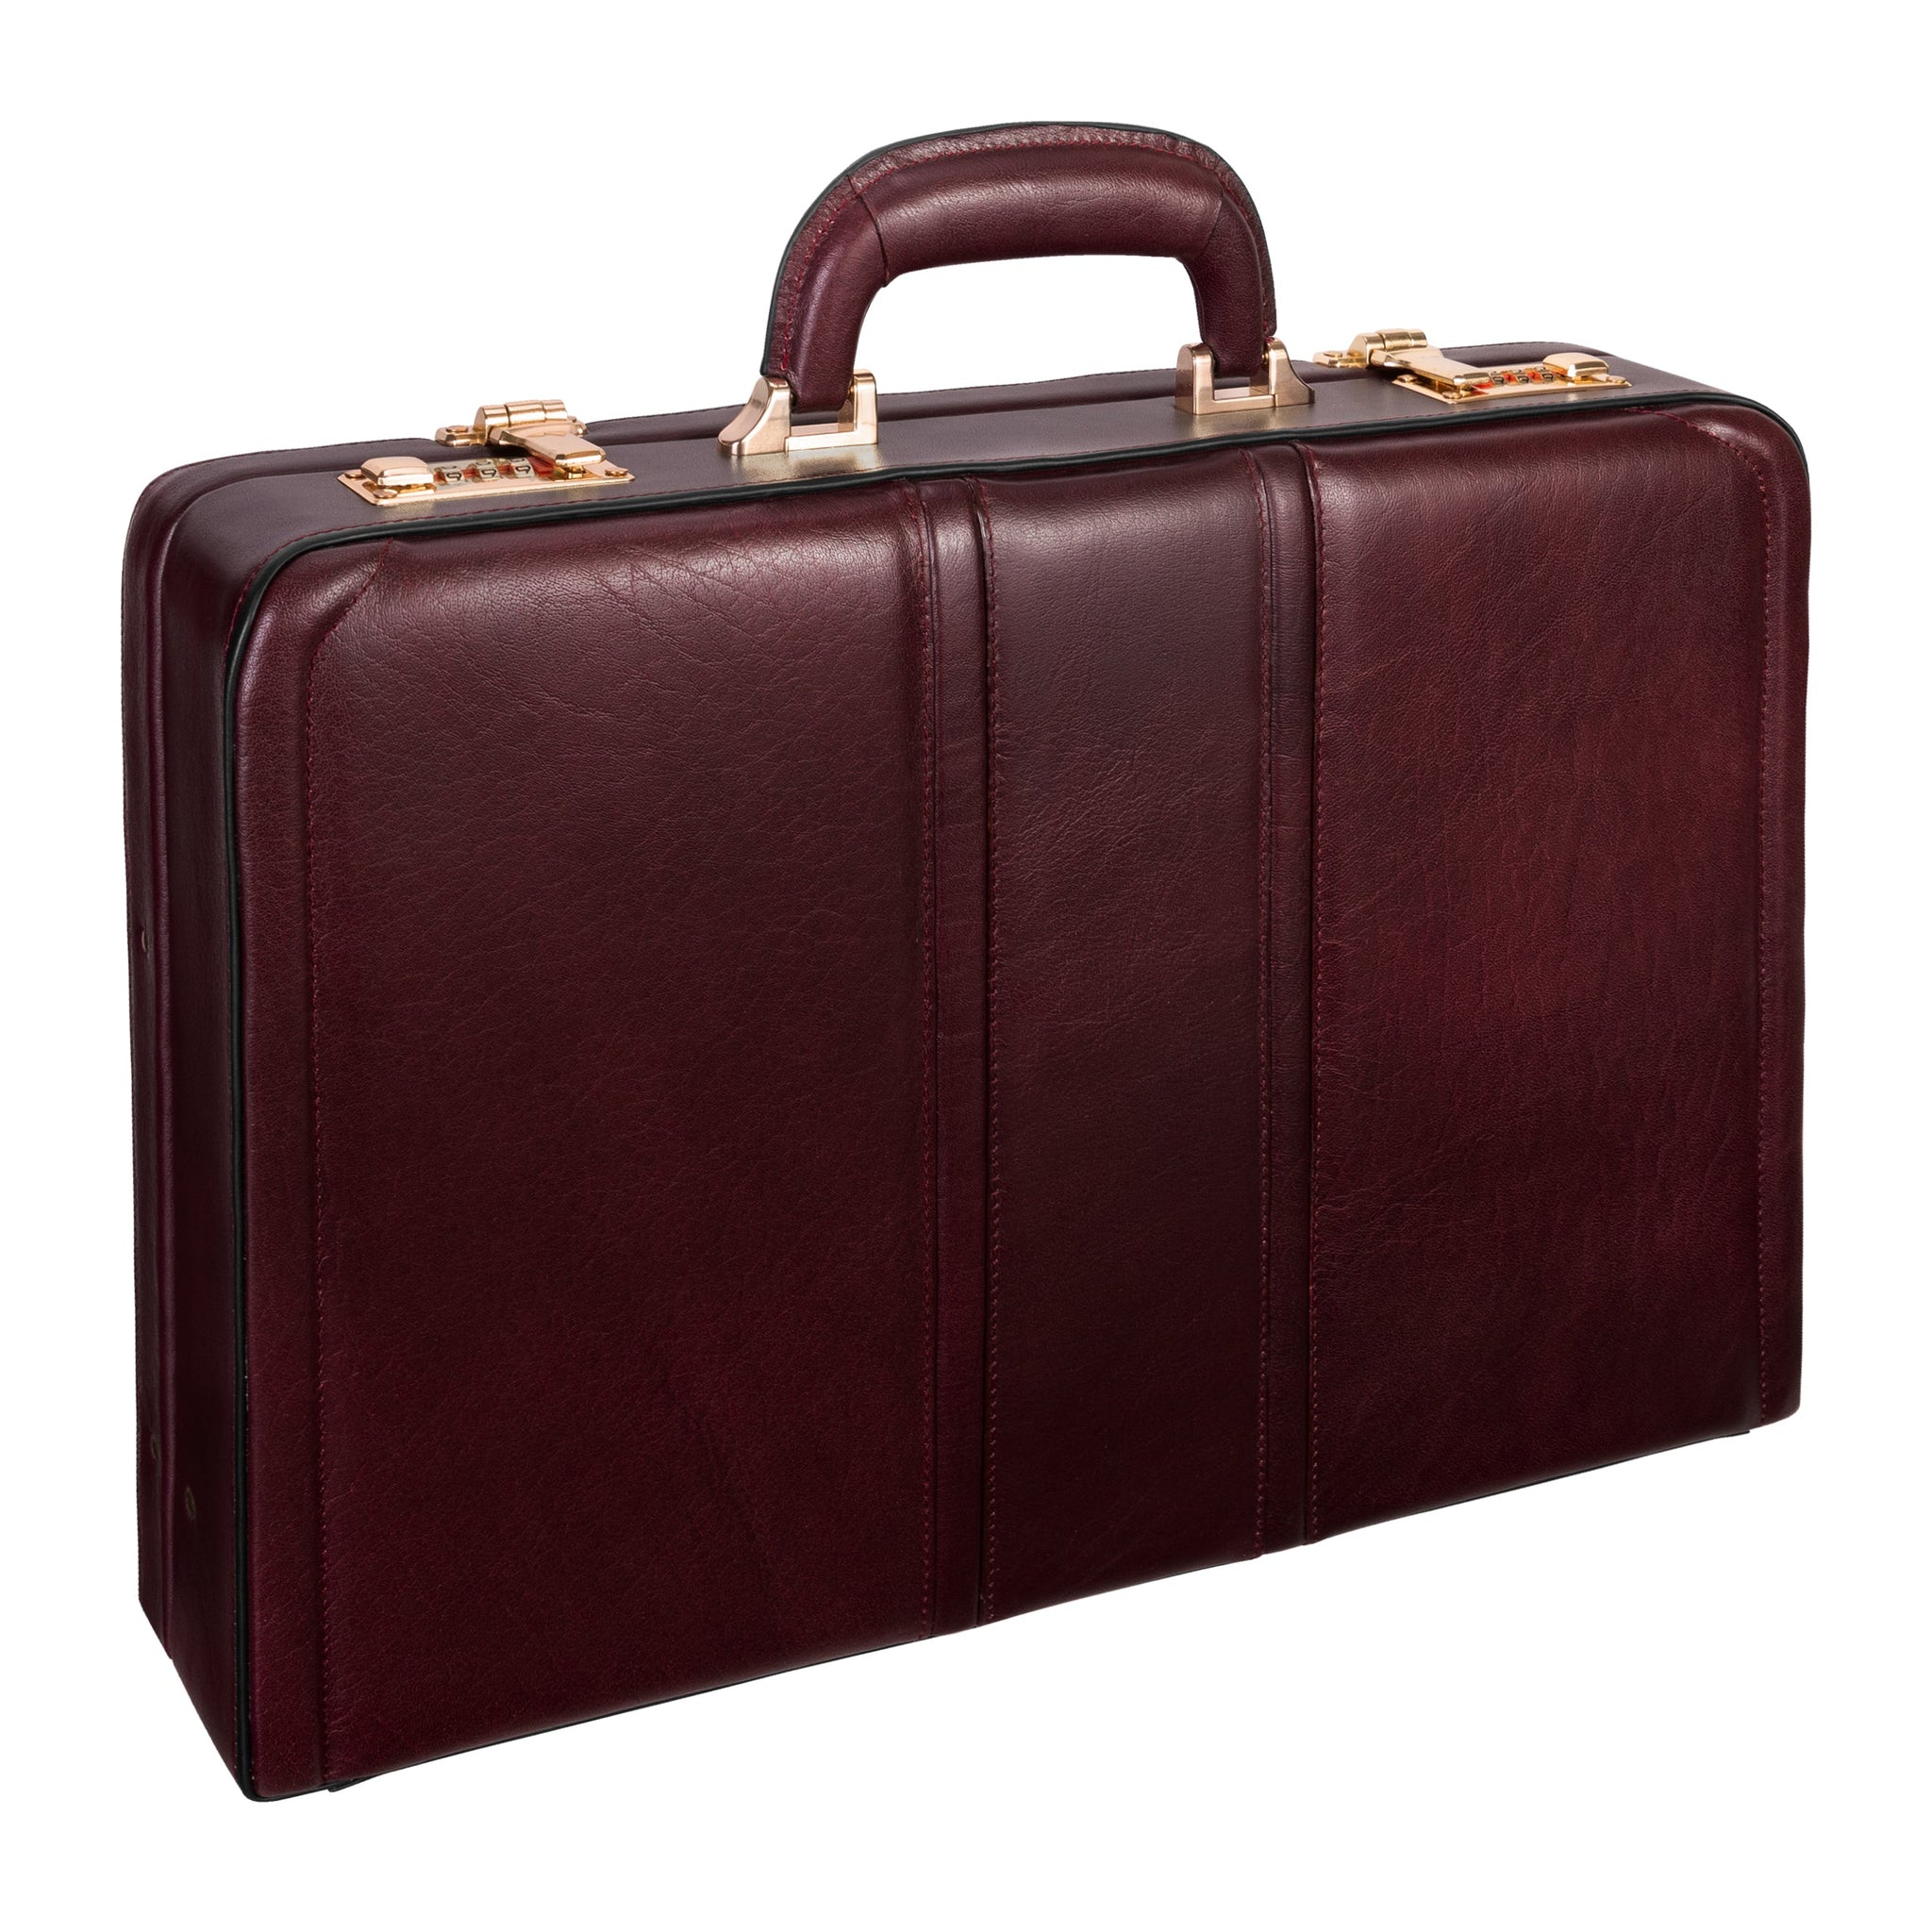 McKlein DALEY Leather 3.5" Attaché Briefcase